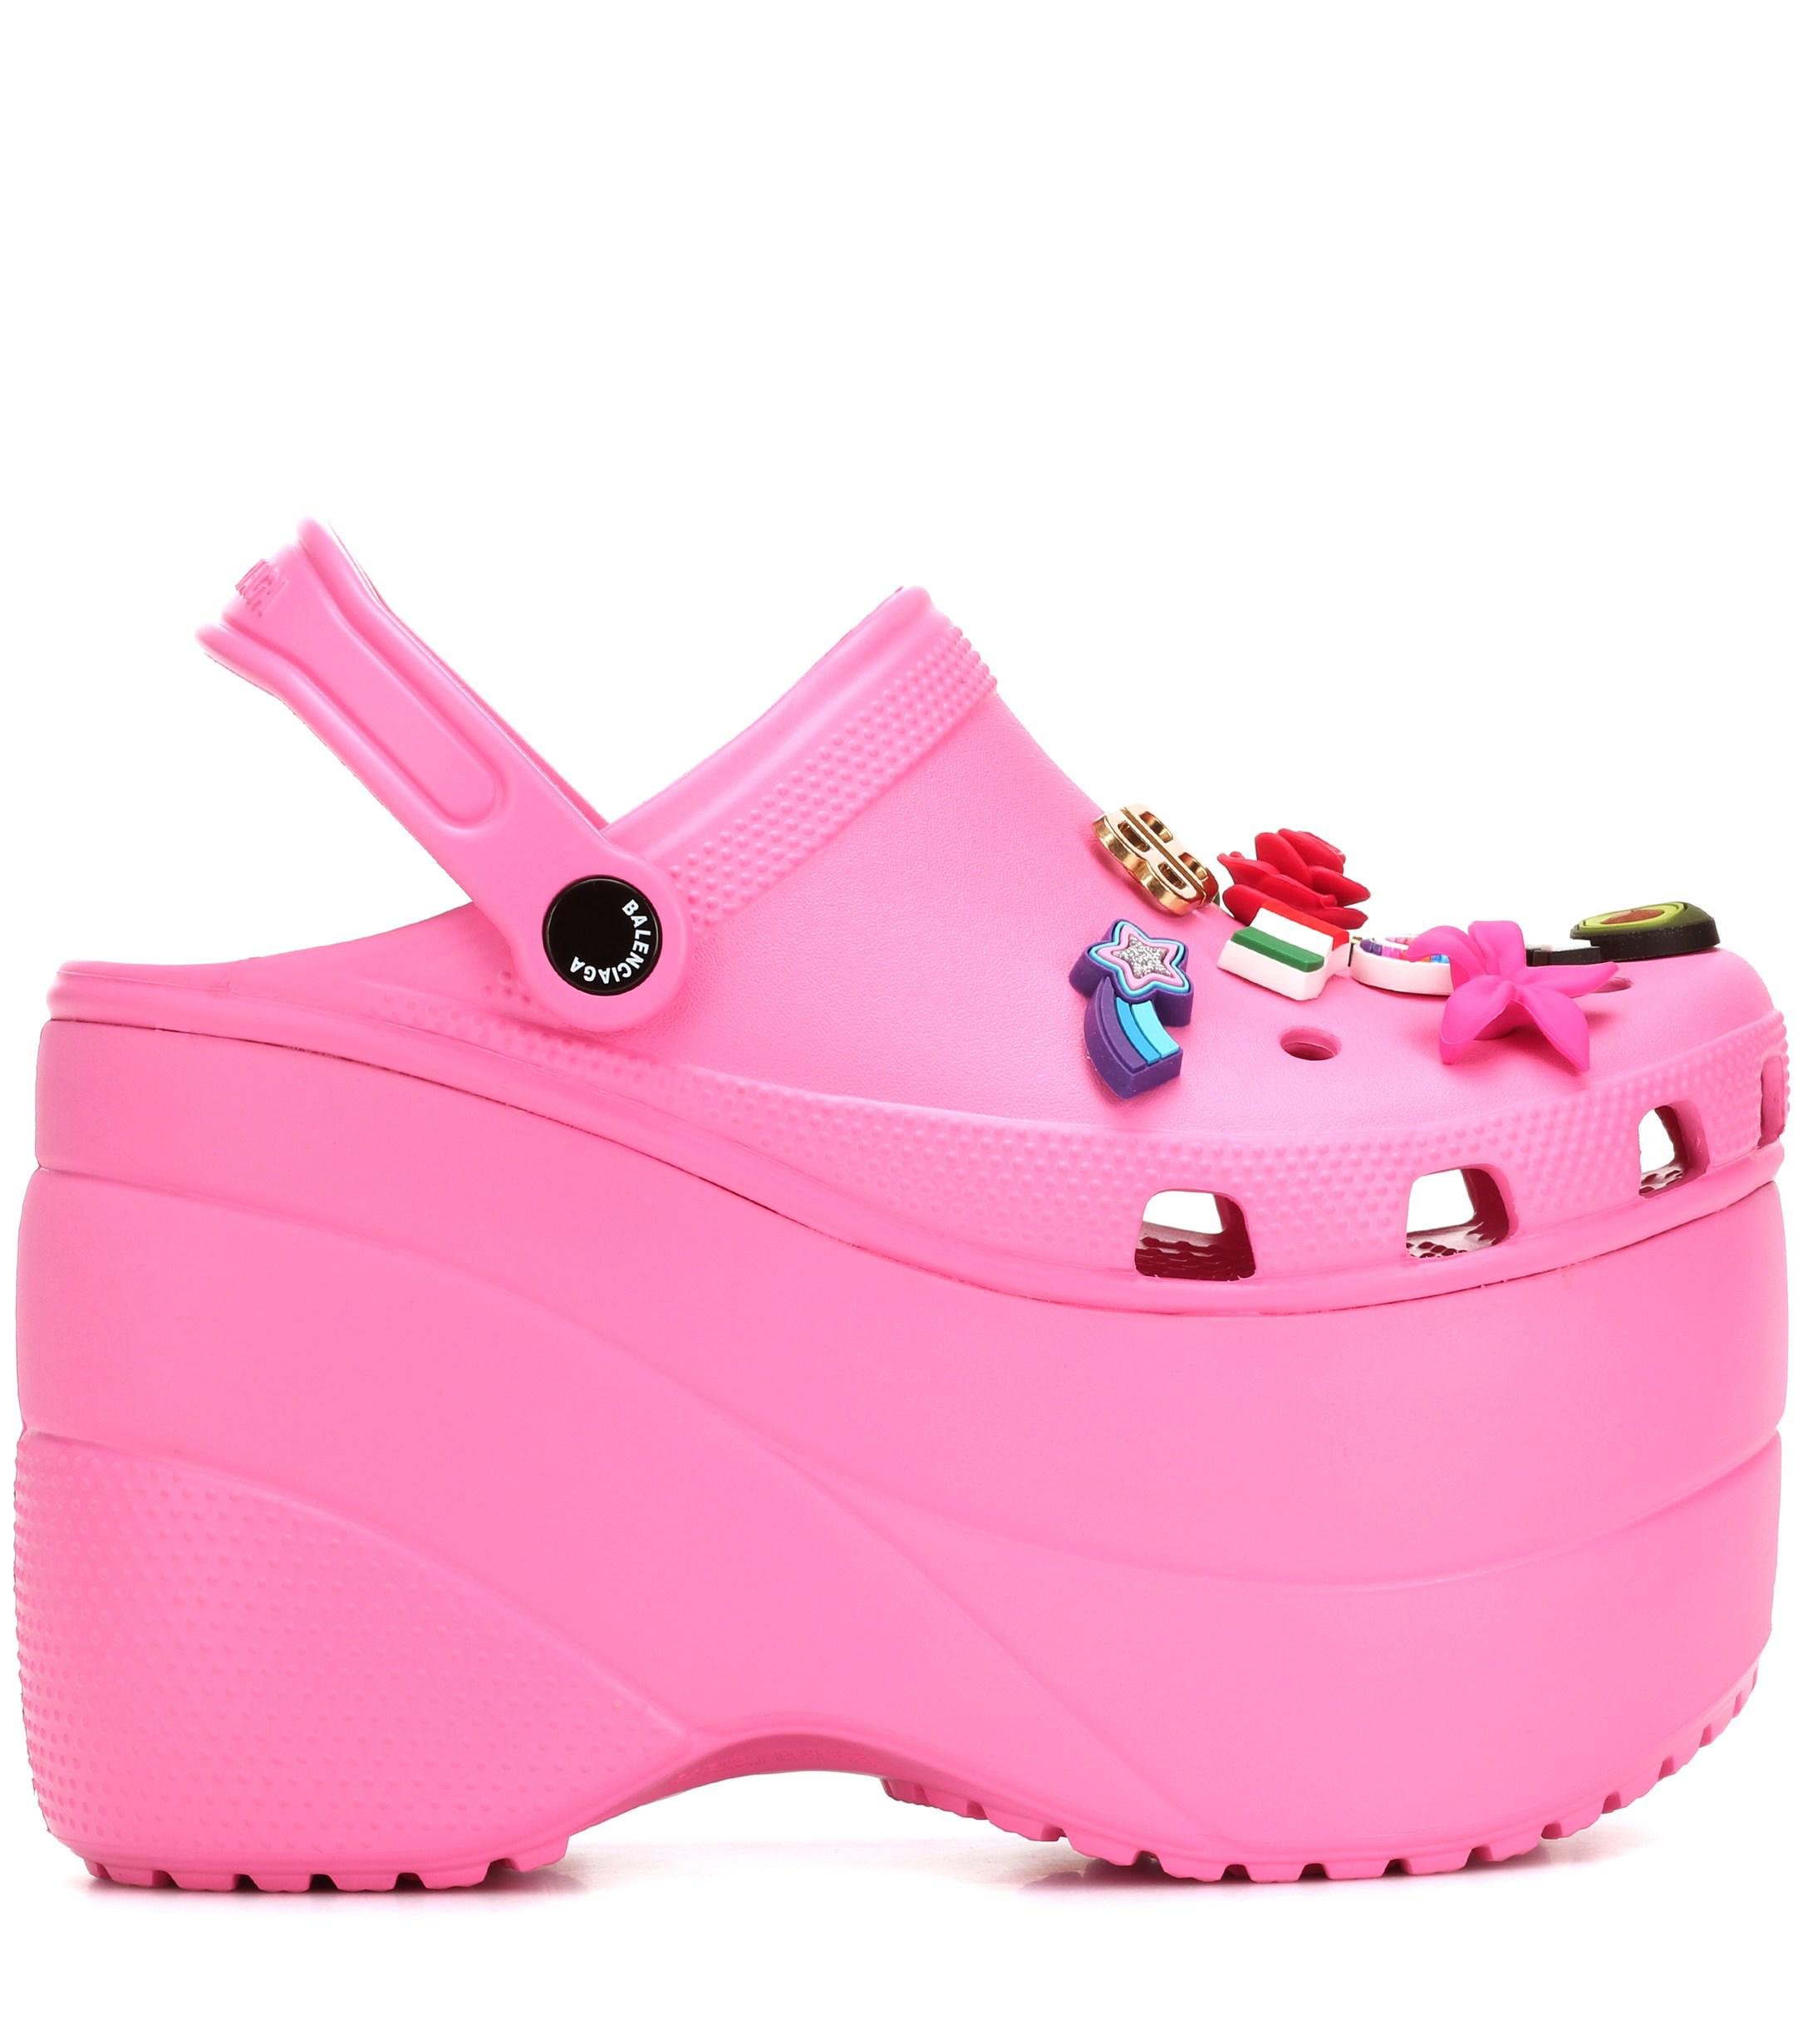 Balenciaga Platform Crocs in Pink - Lyst